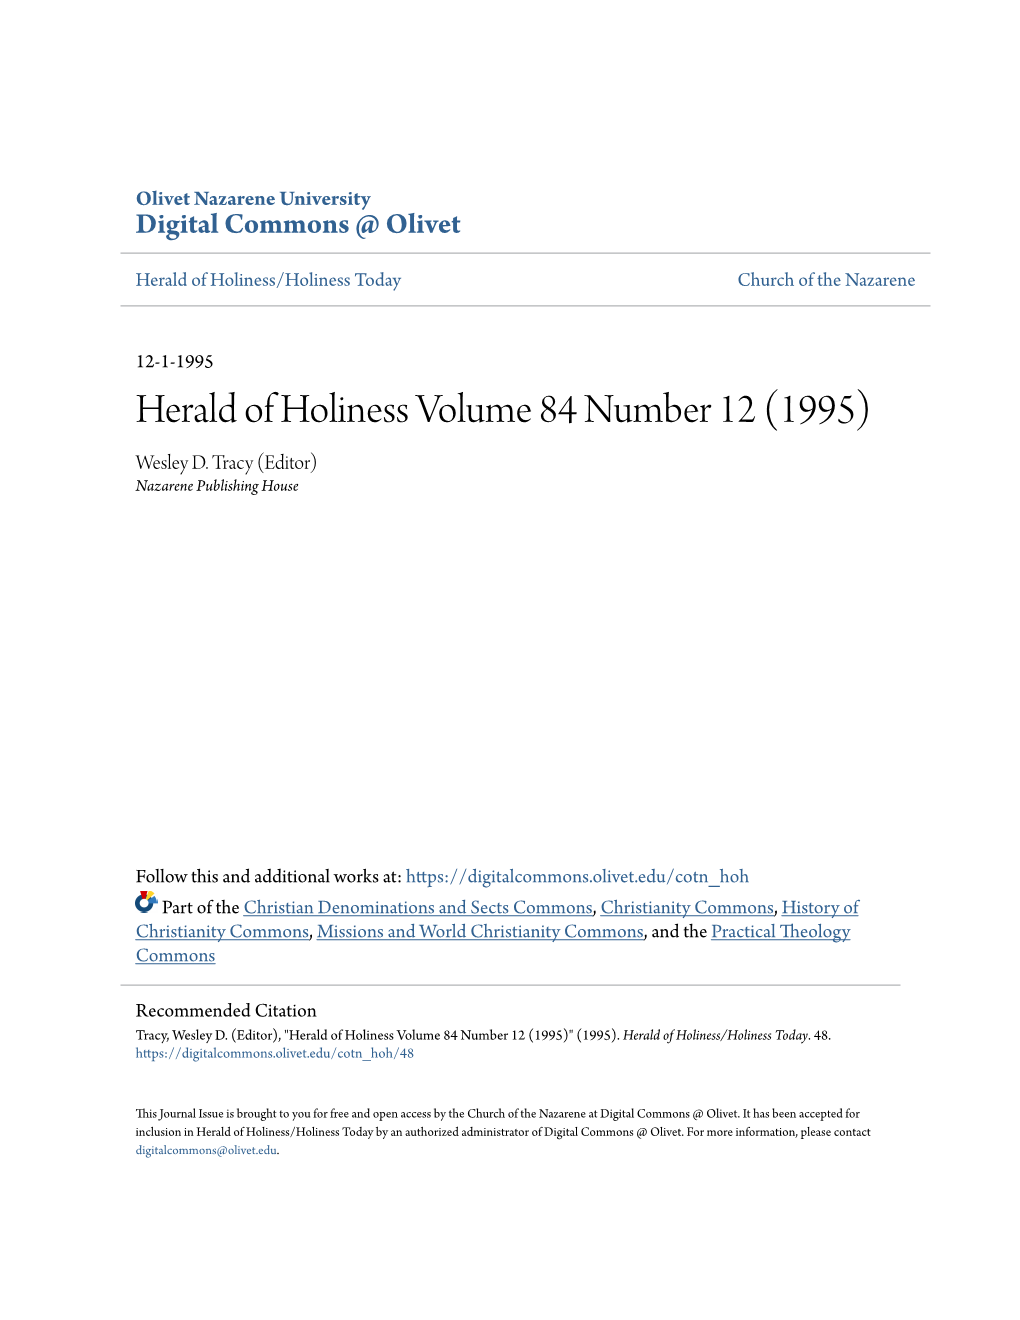 Herald of Holiness Volume 84 Number 12 (1995) Wesley D